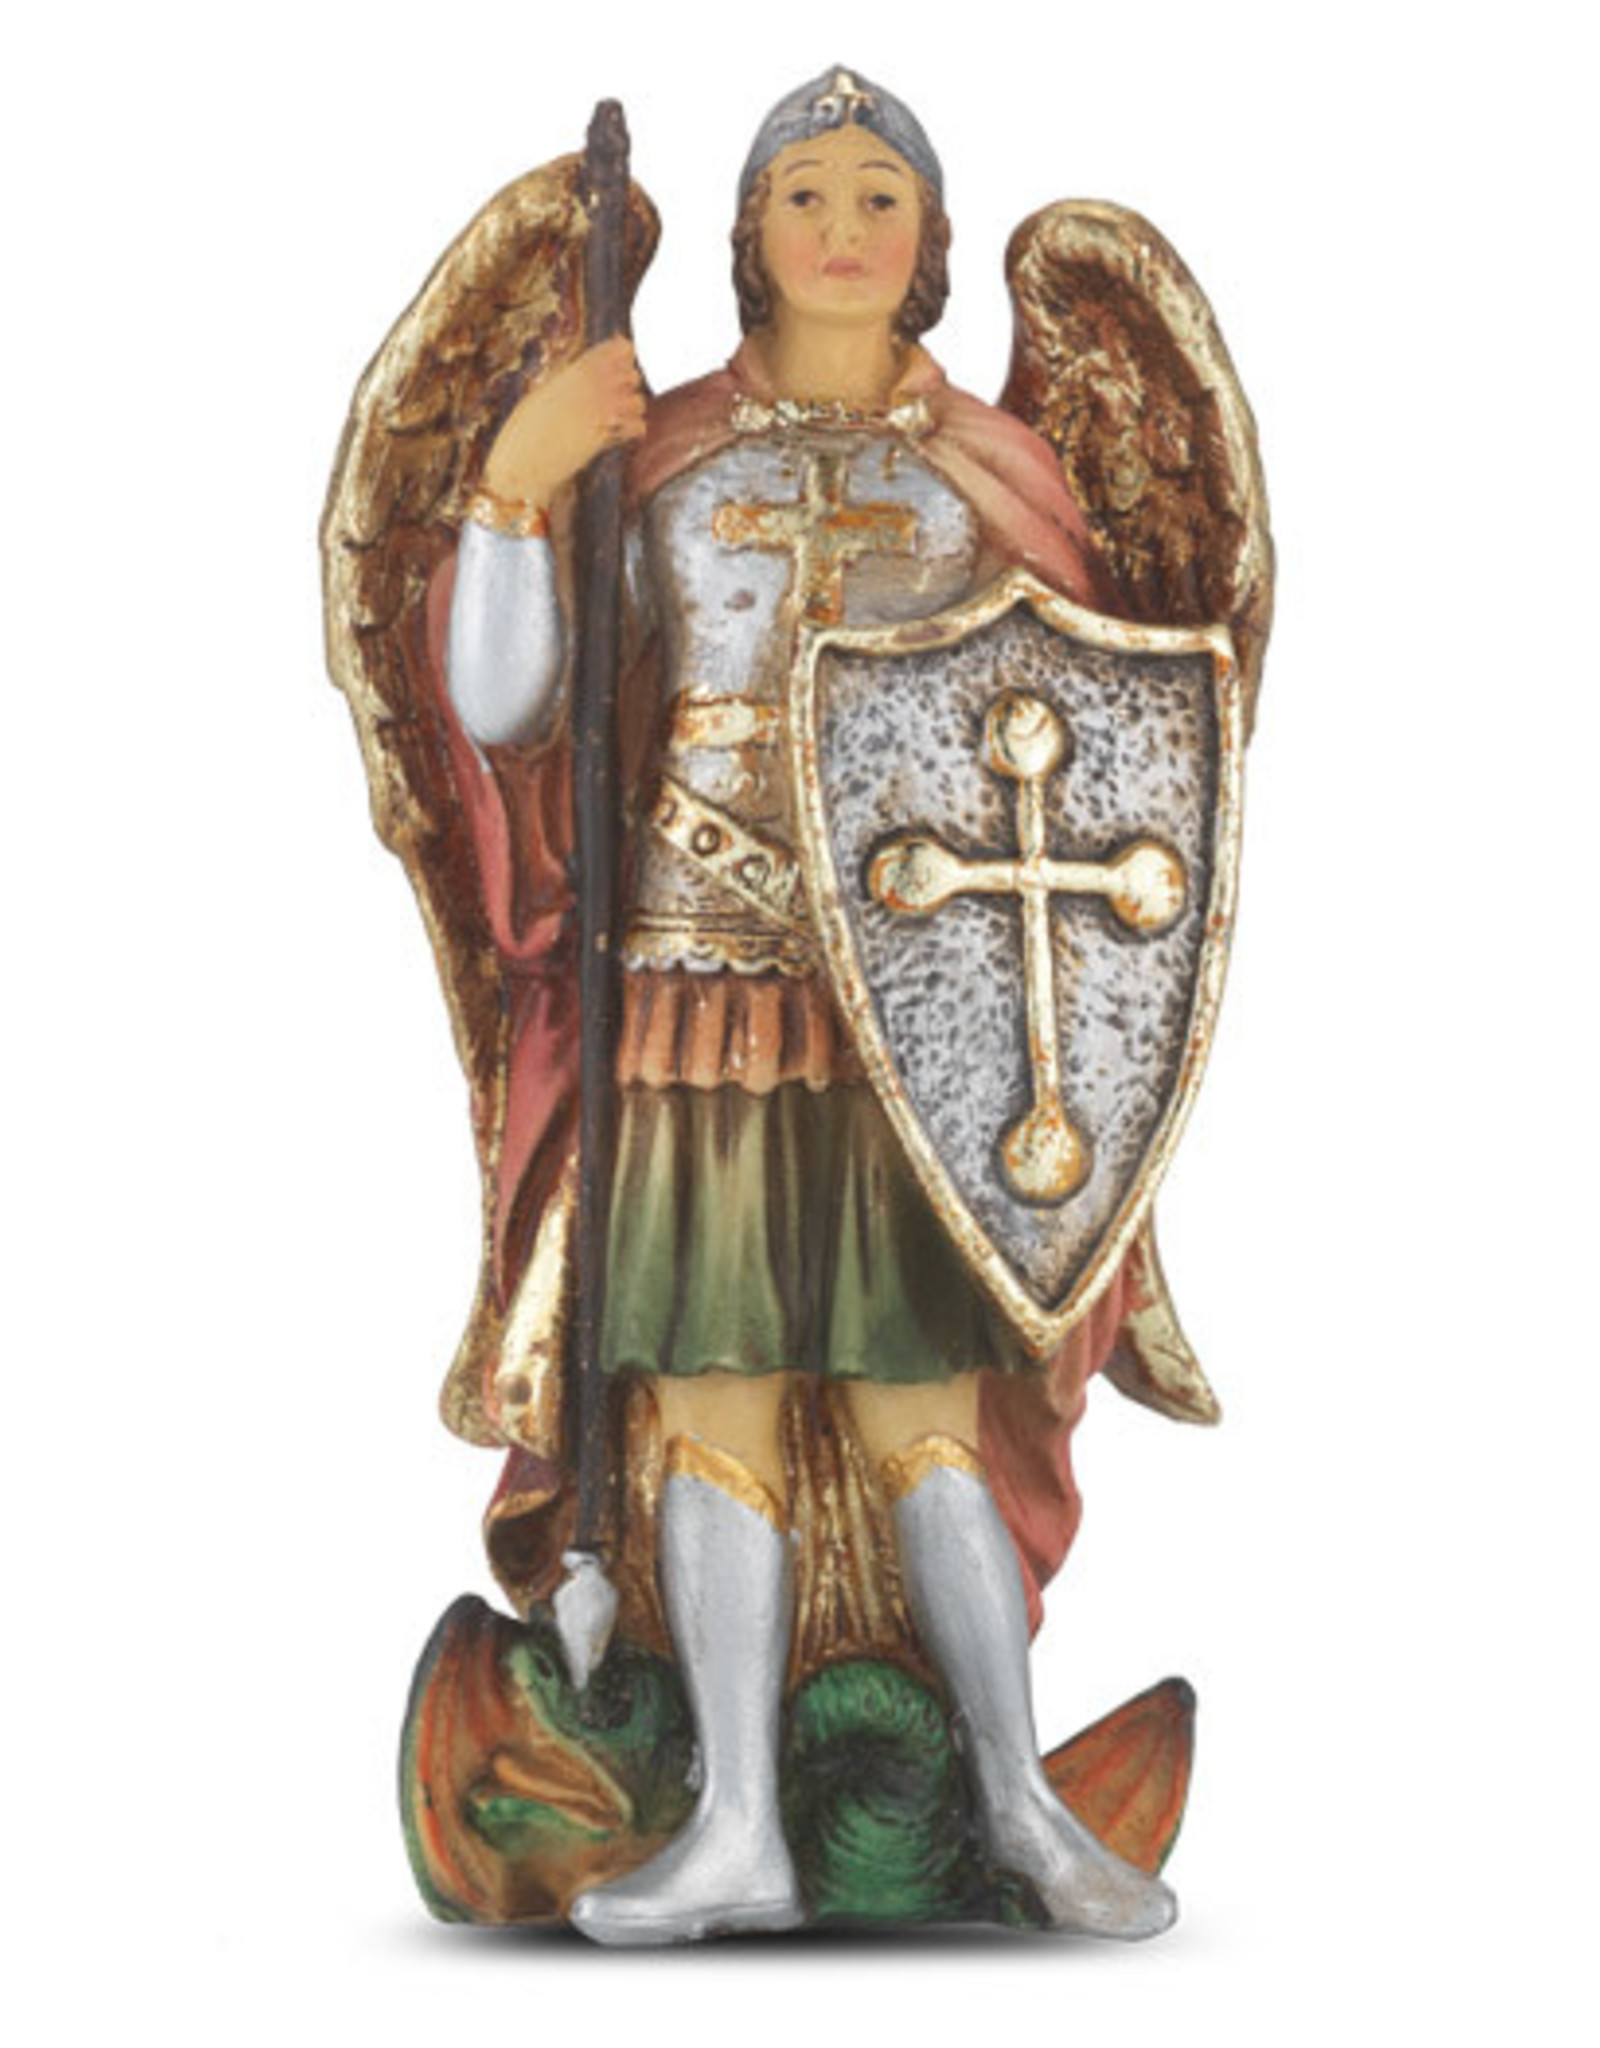 Hirten Patron Saint Statue - St. Michael, Archangel Warrior of God